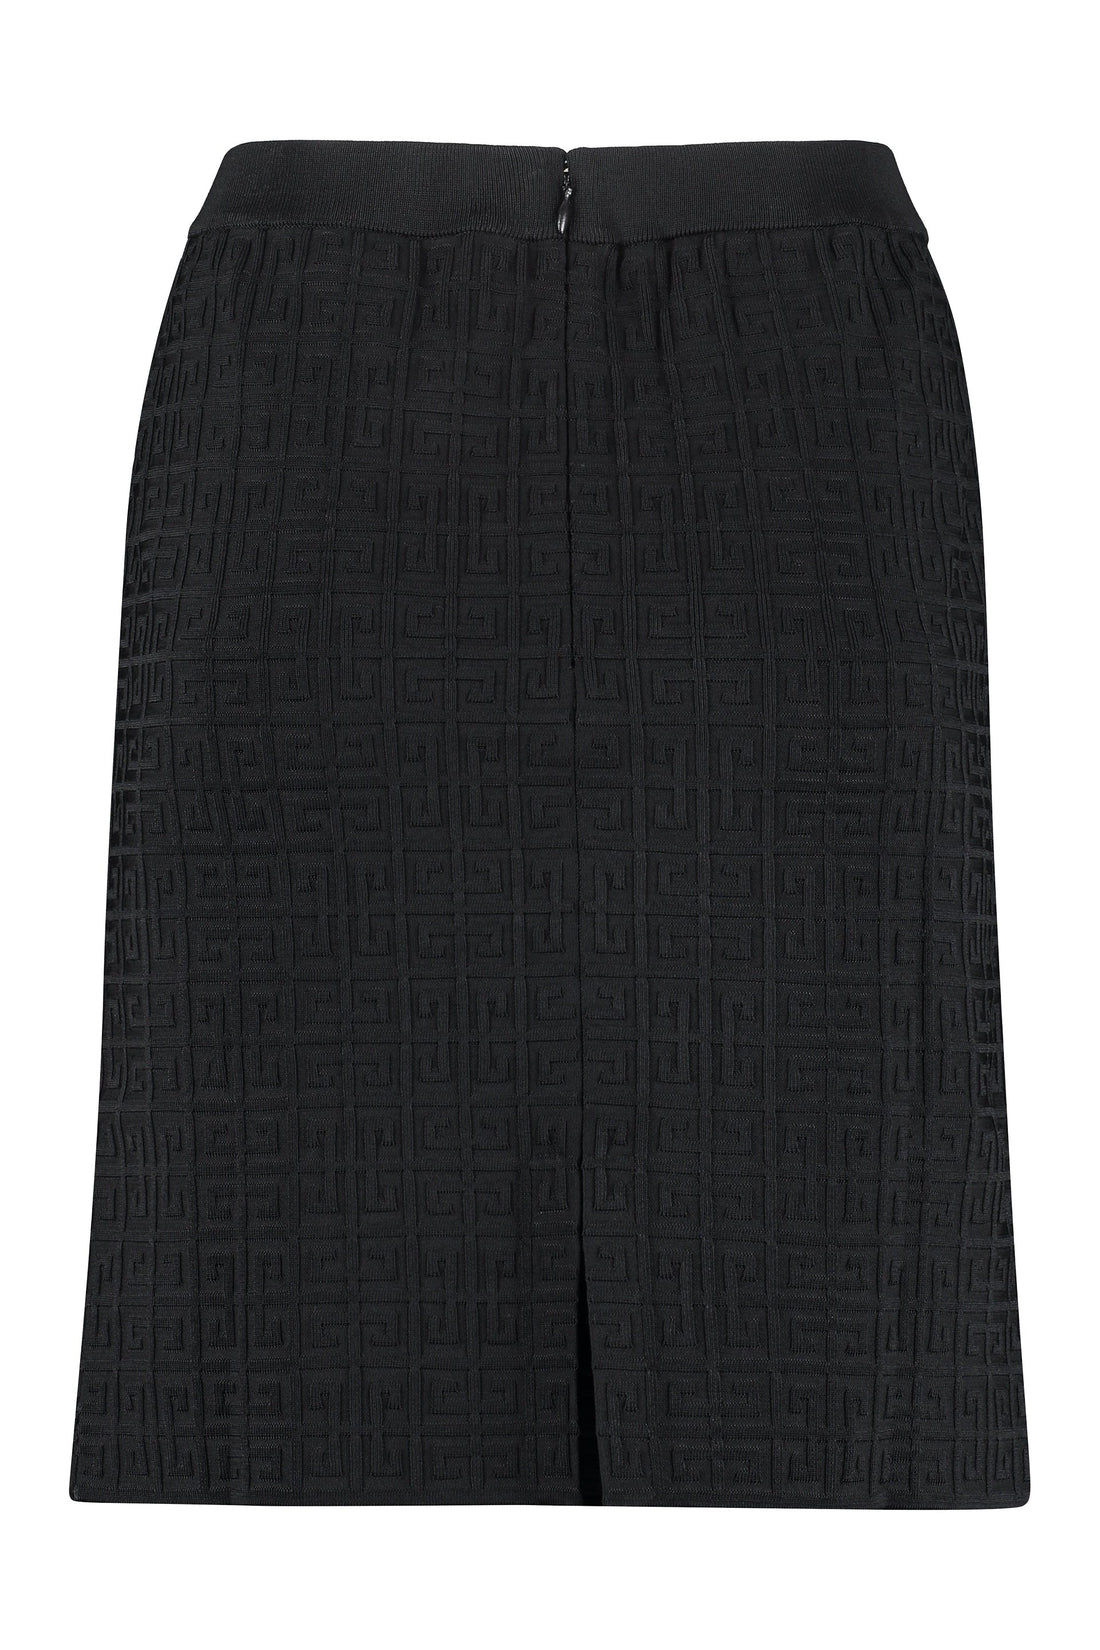 Givenchy-OUTLET-SALE-Jacquard knit skirt-ARCHIVIST